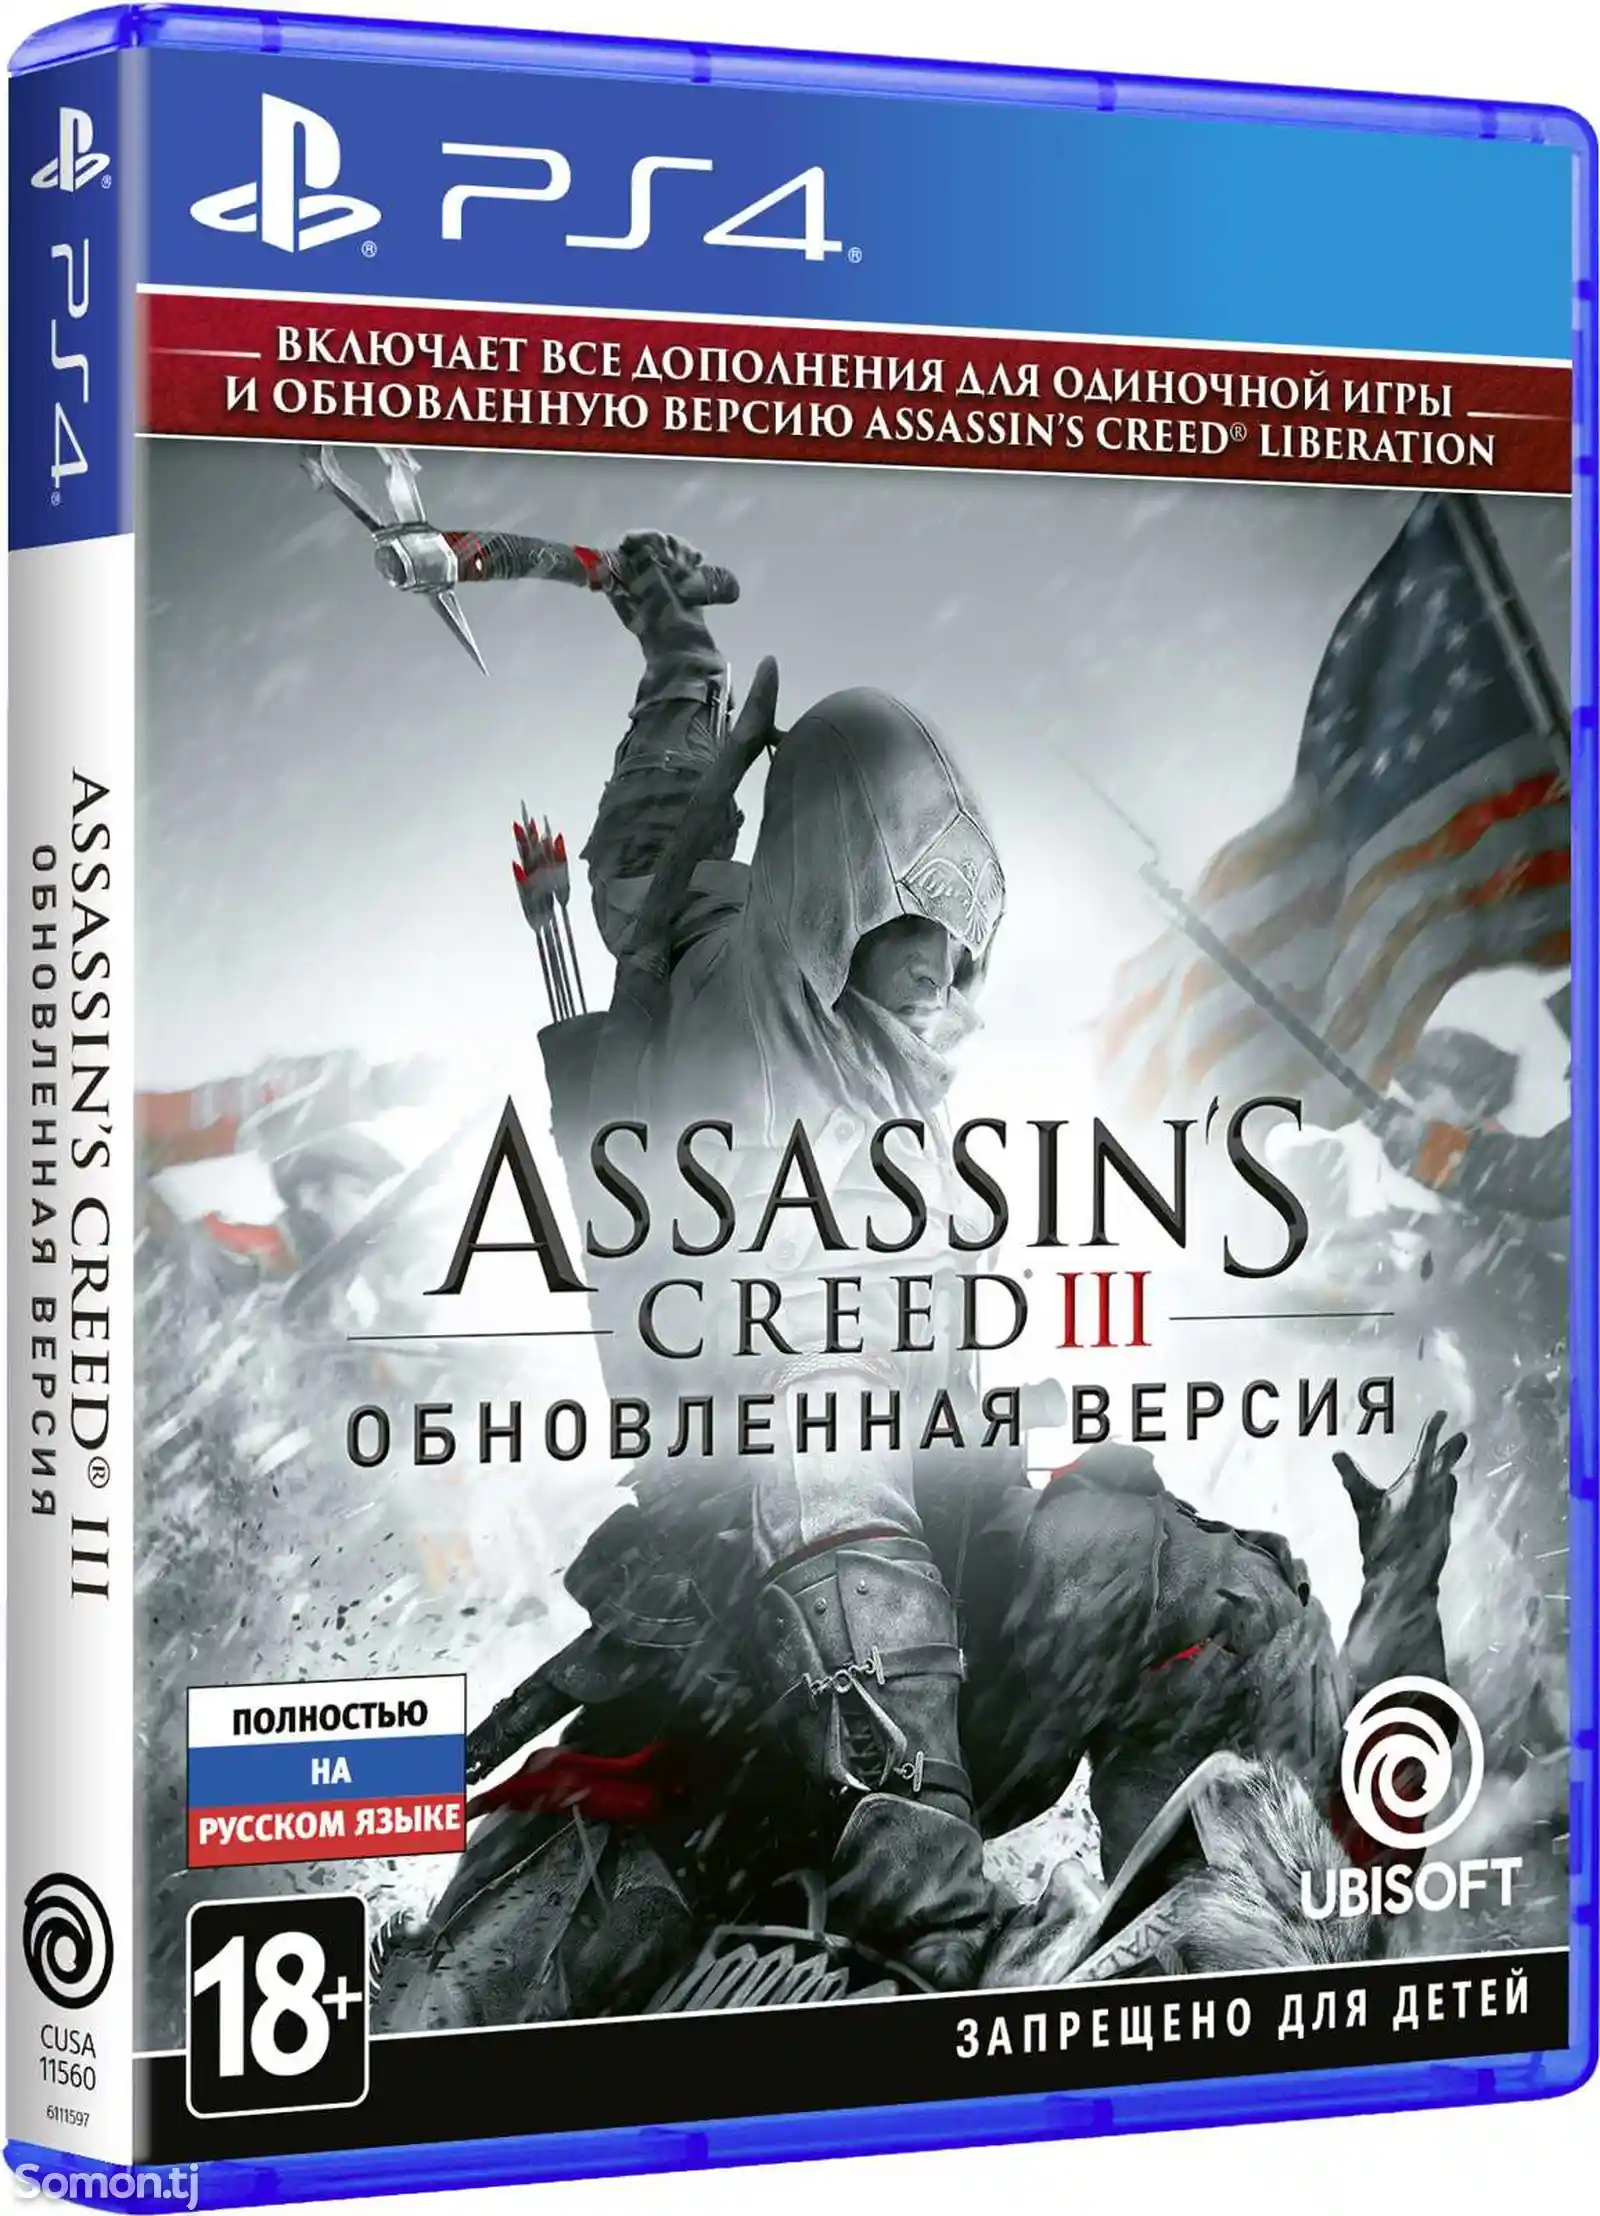 Игра Assasssins Creed 3 remastered для PS-4 / 5.05 / 6.72 / 7.02 / 7.55 / 9.00 /-1